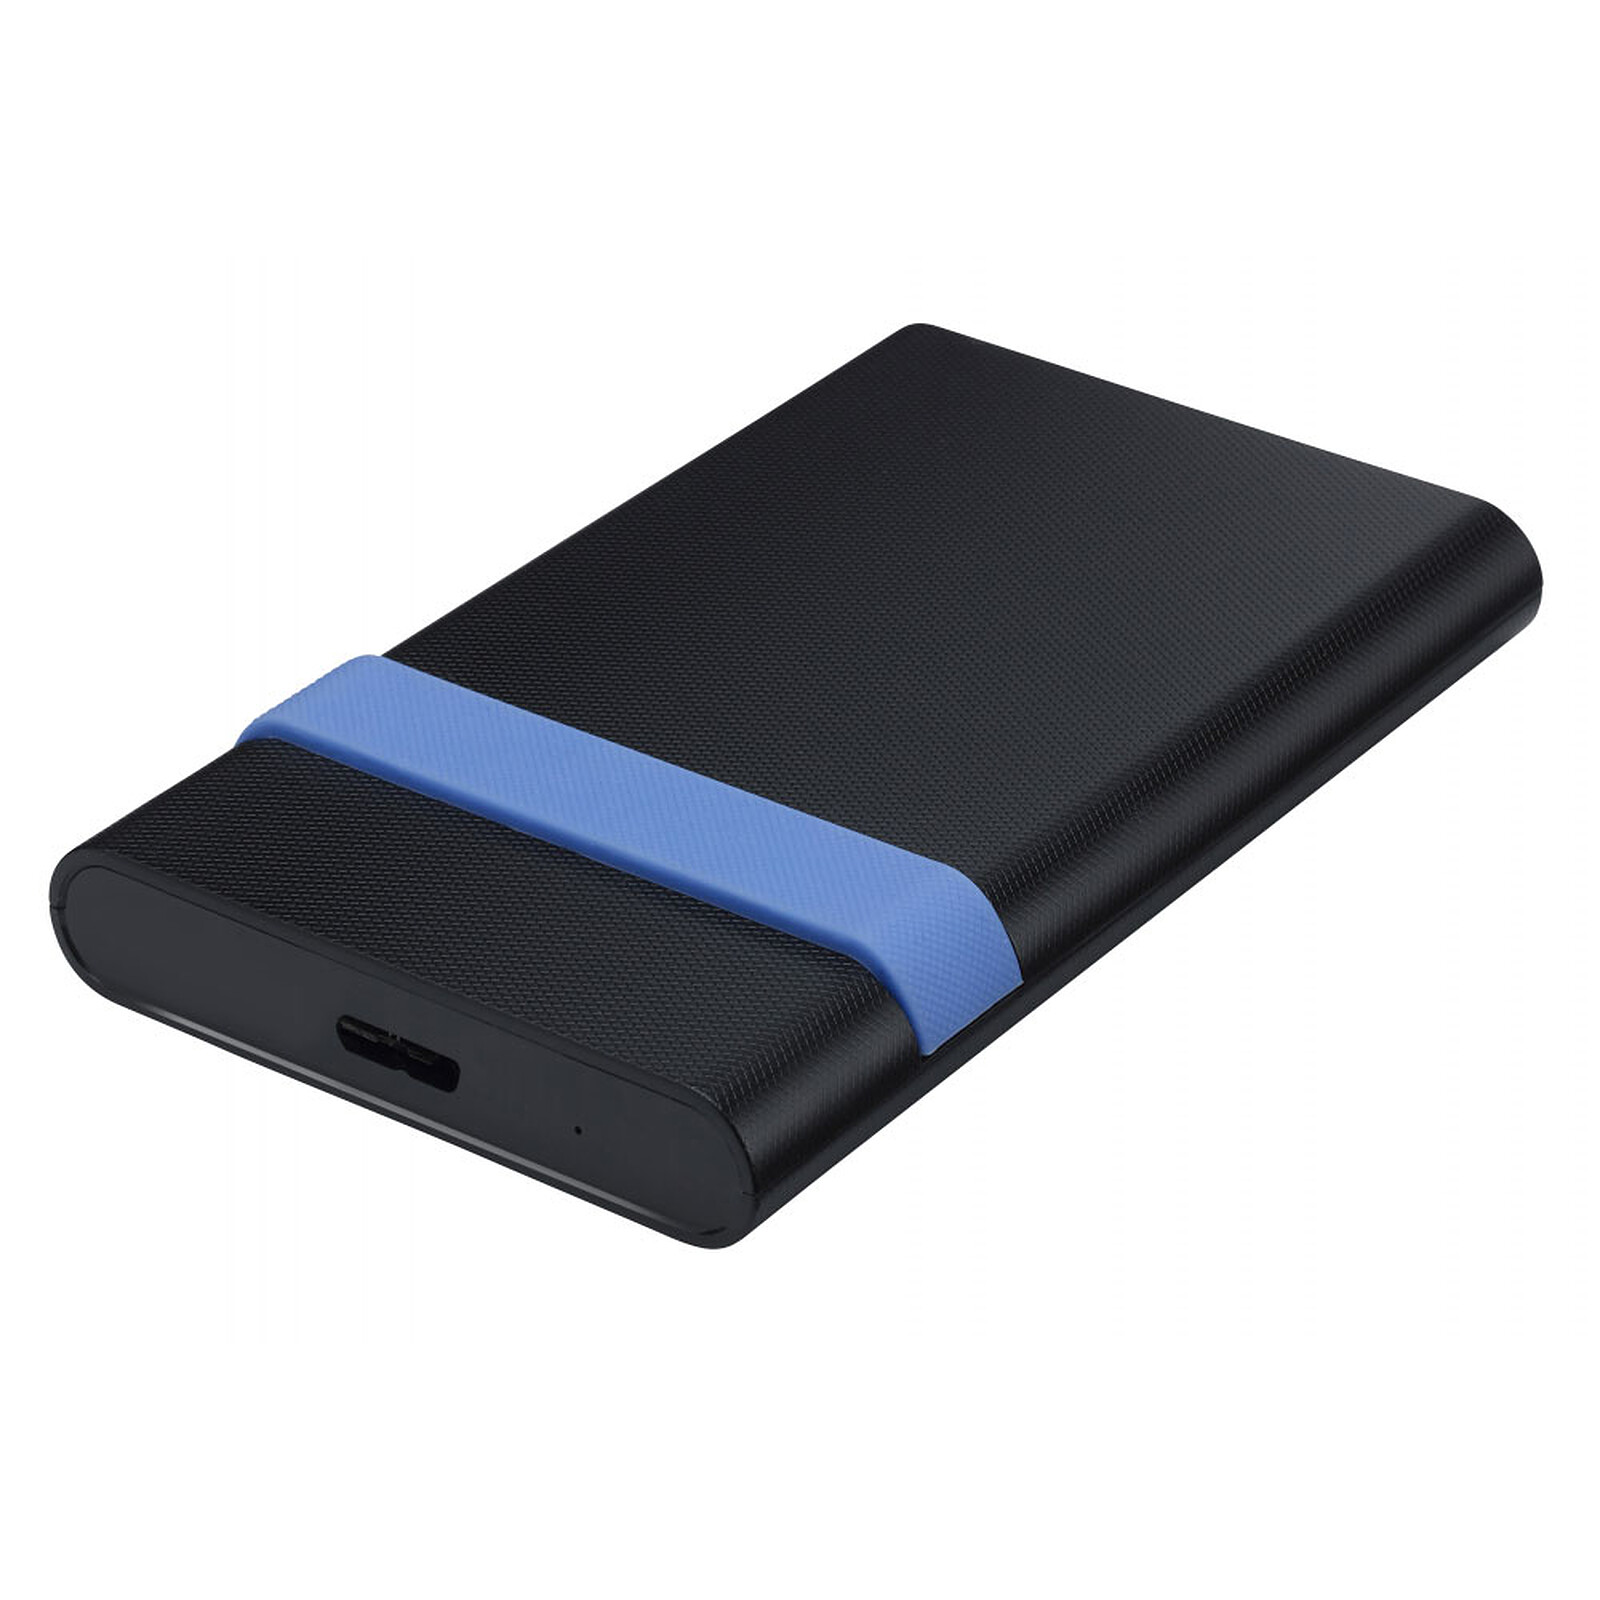 Advance Steeldisk USB 3.0 - Boîtier disque dur - Garantie 3 ans LDLC